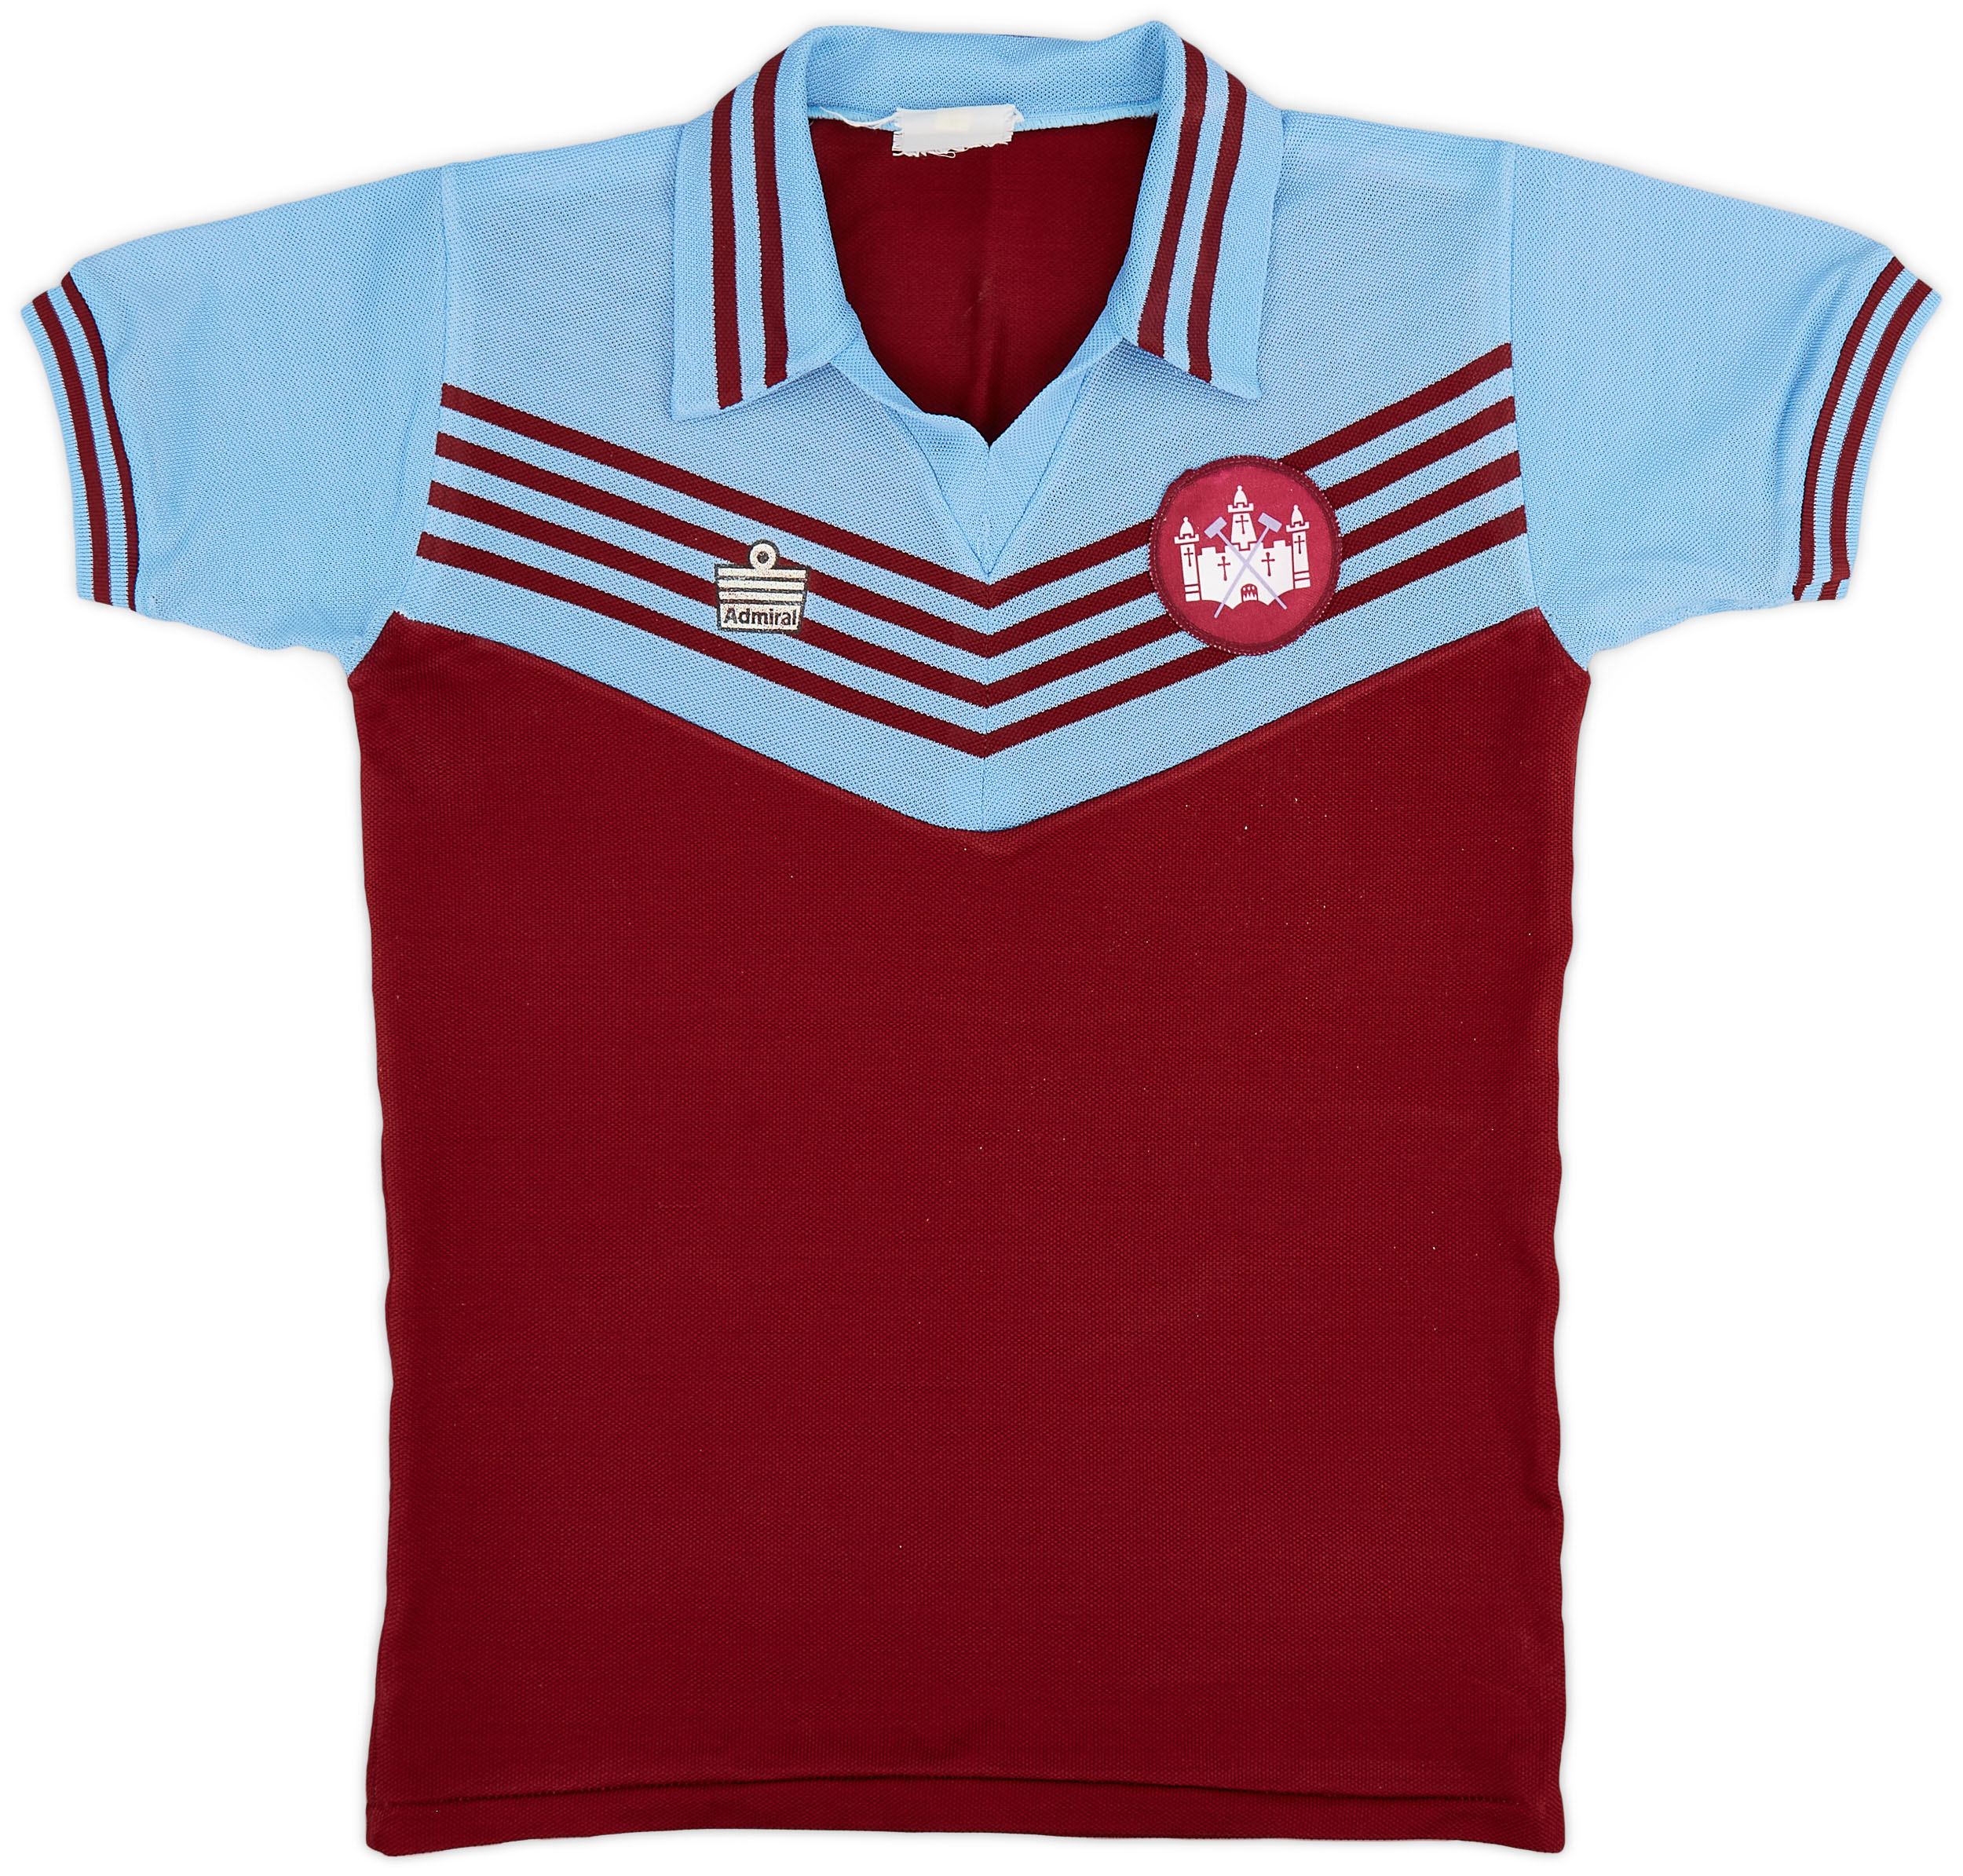 1976-80 West Ham United Home Shirt - Excellent 9/10 - ()